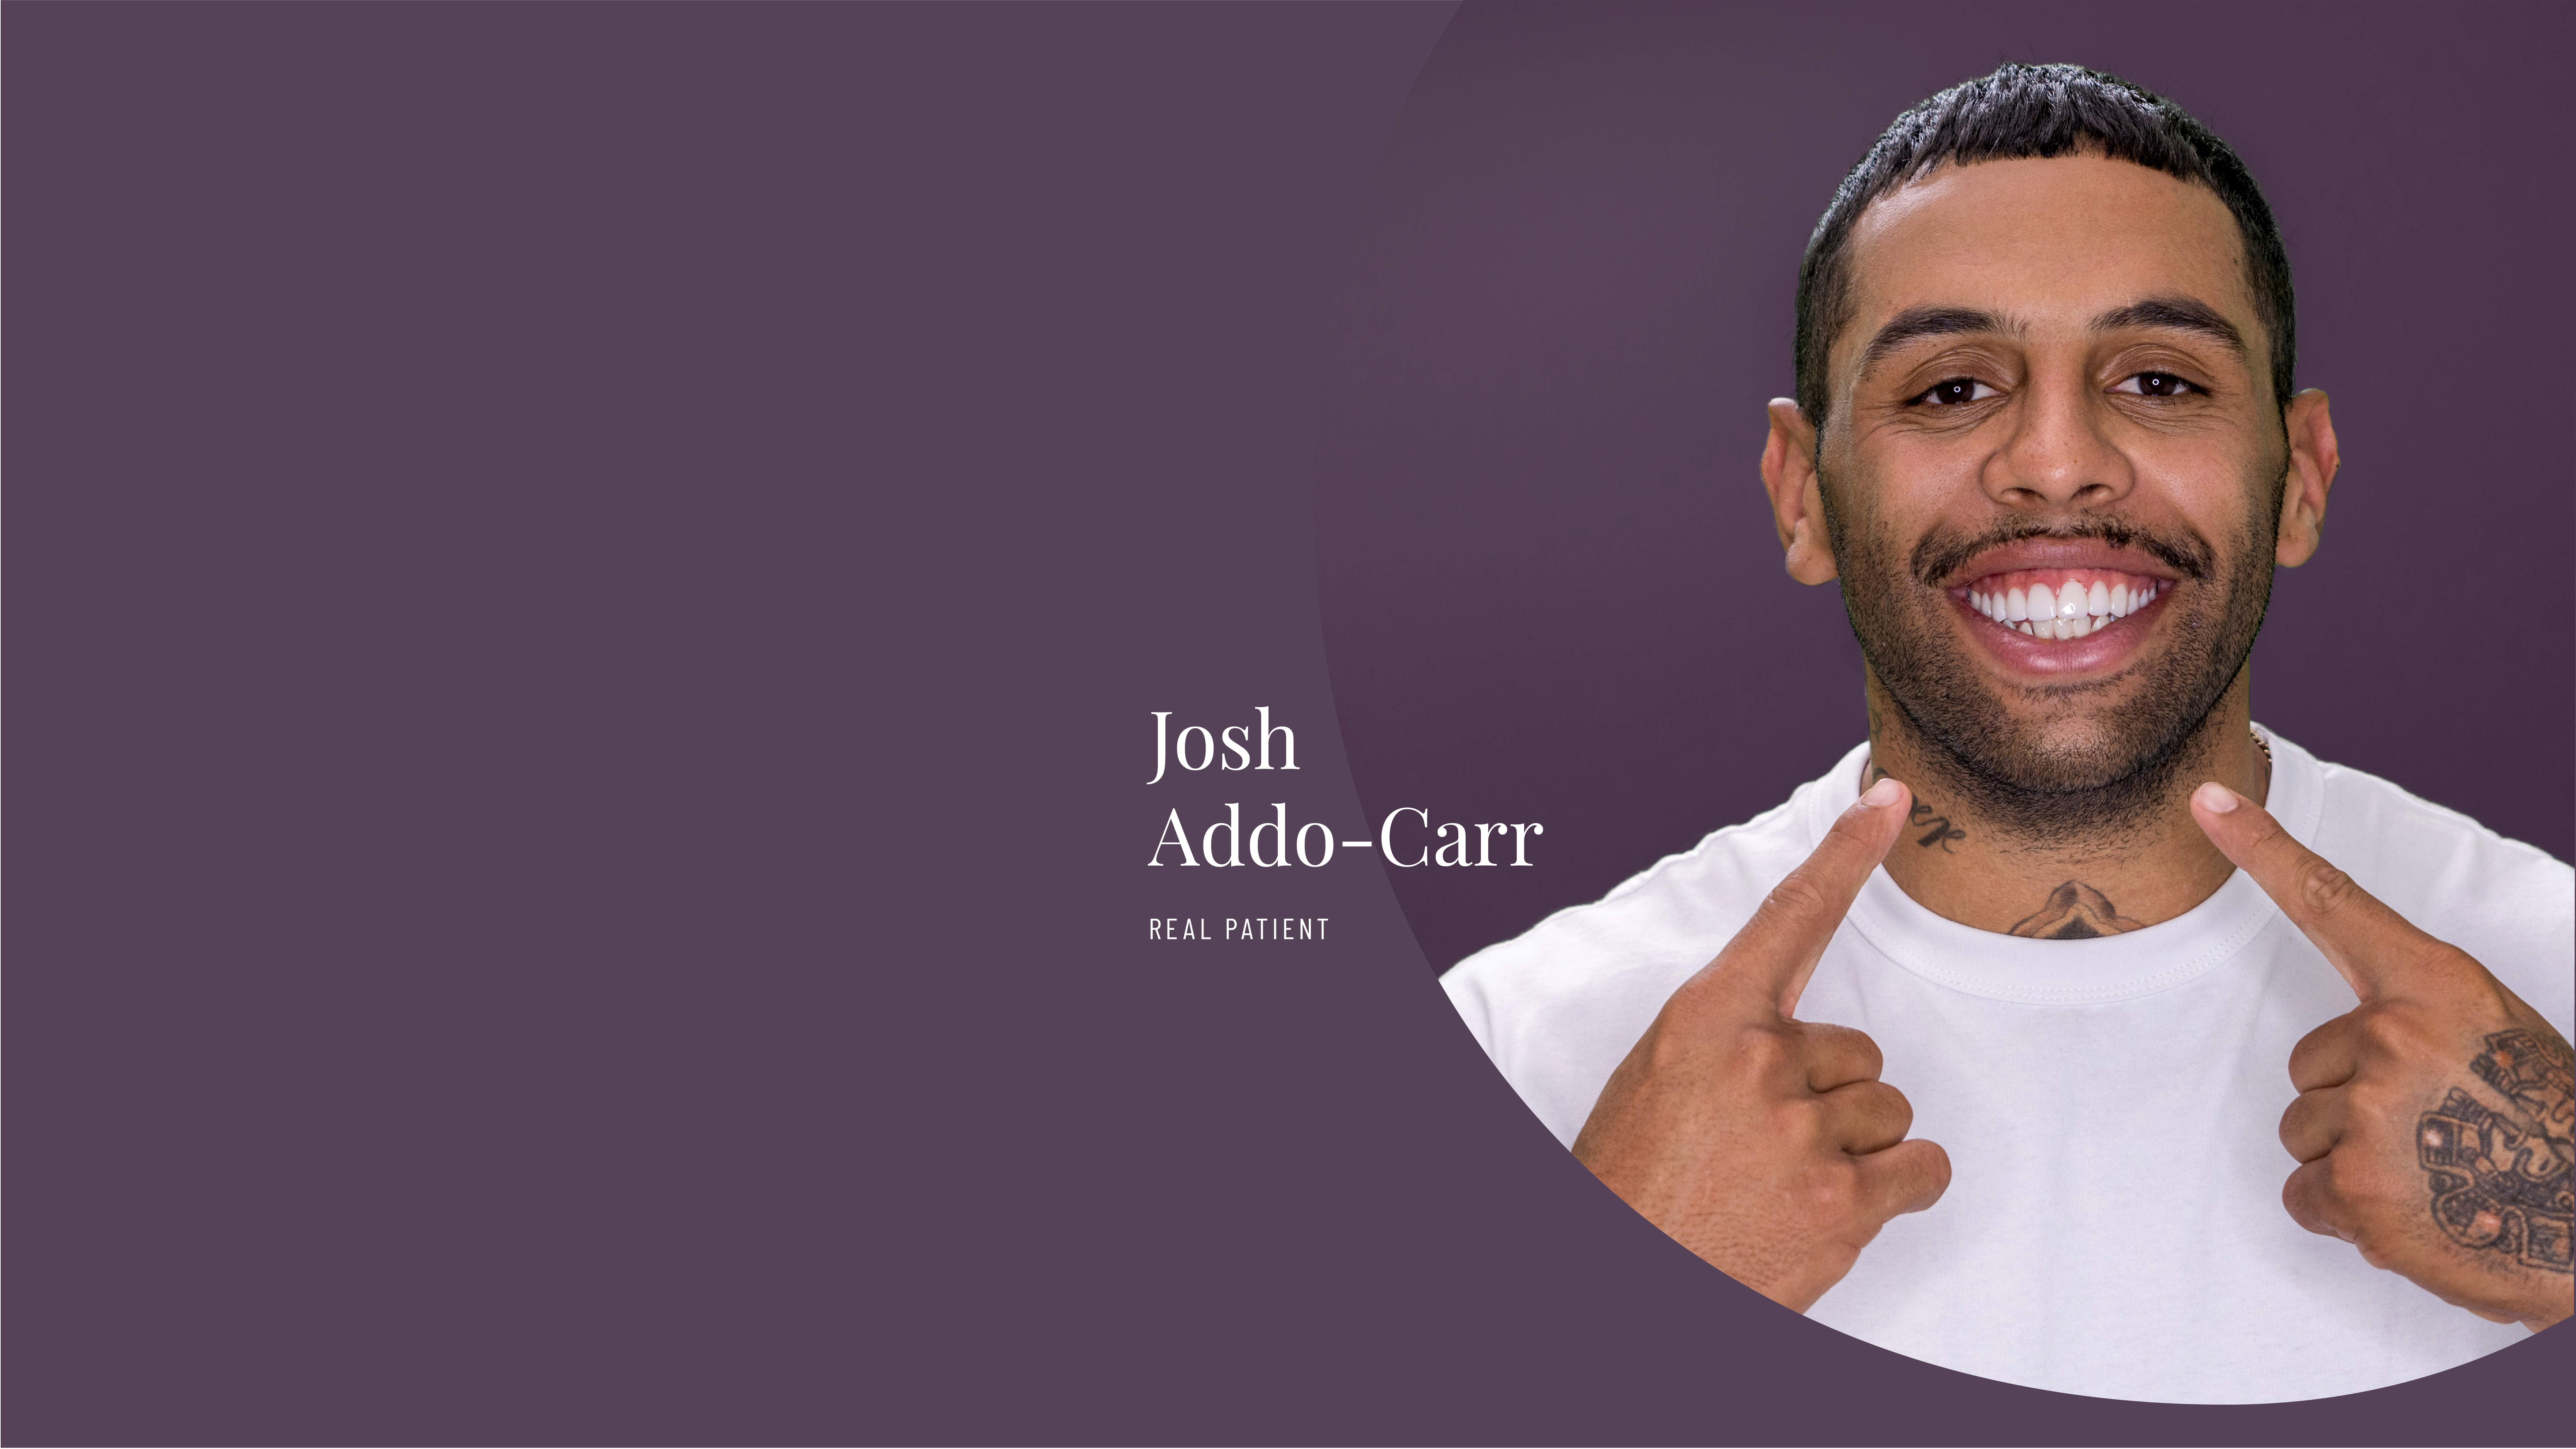 Josh Addo-Carr has regular dental checkups and professional dental cleaning at Vogue Dental Studios.